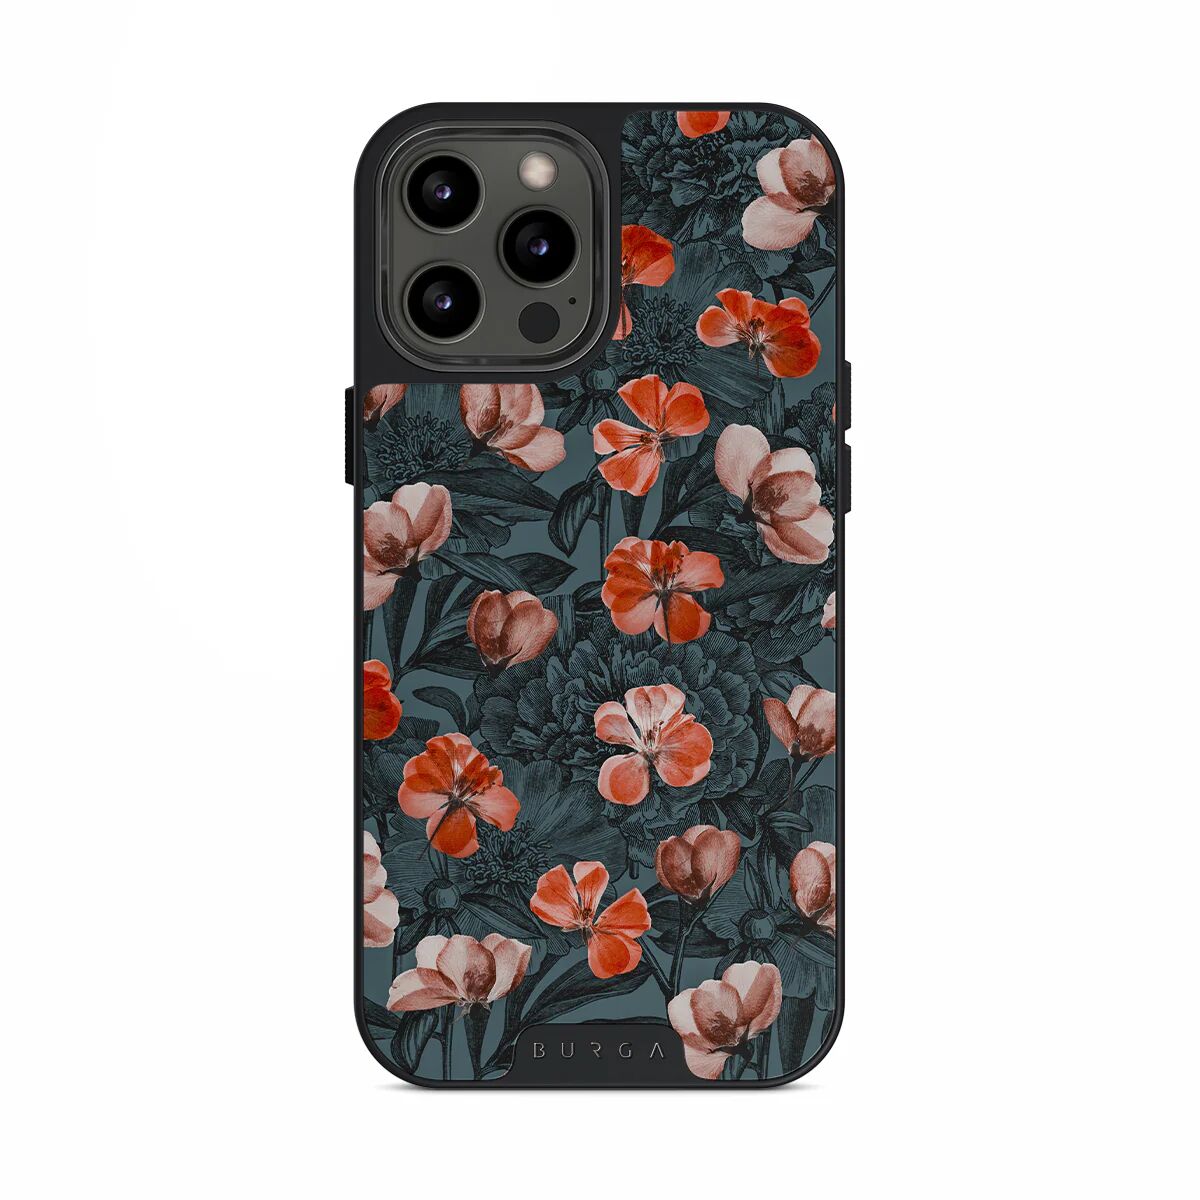 BURGA No Rain No Flowers - iPhone 12 Pro Max Case